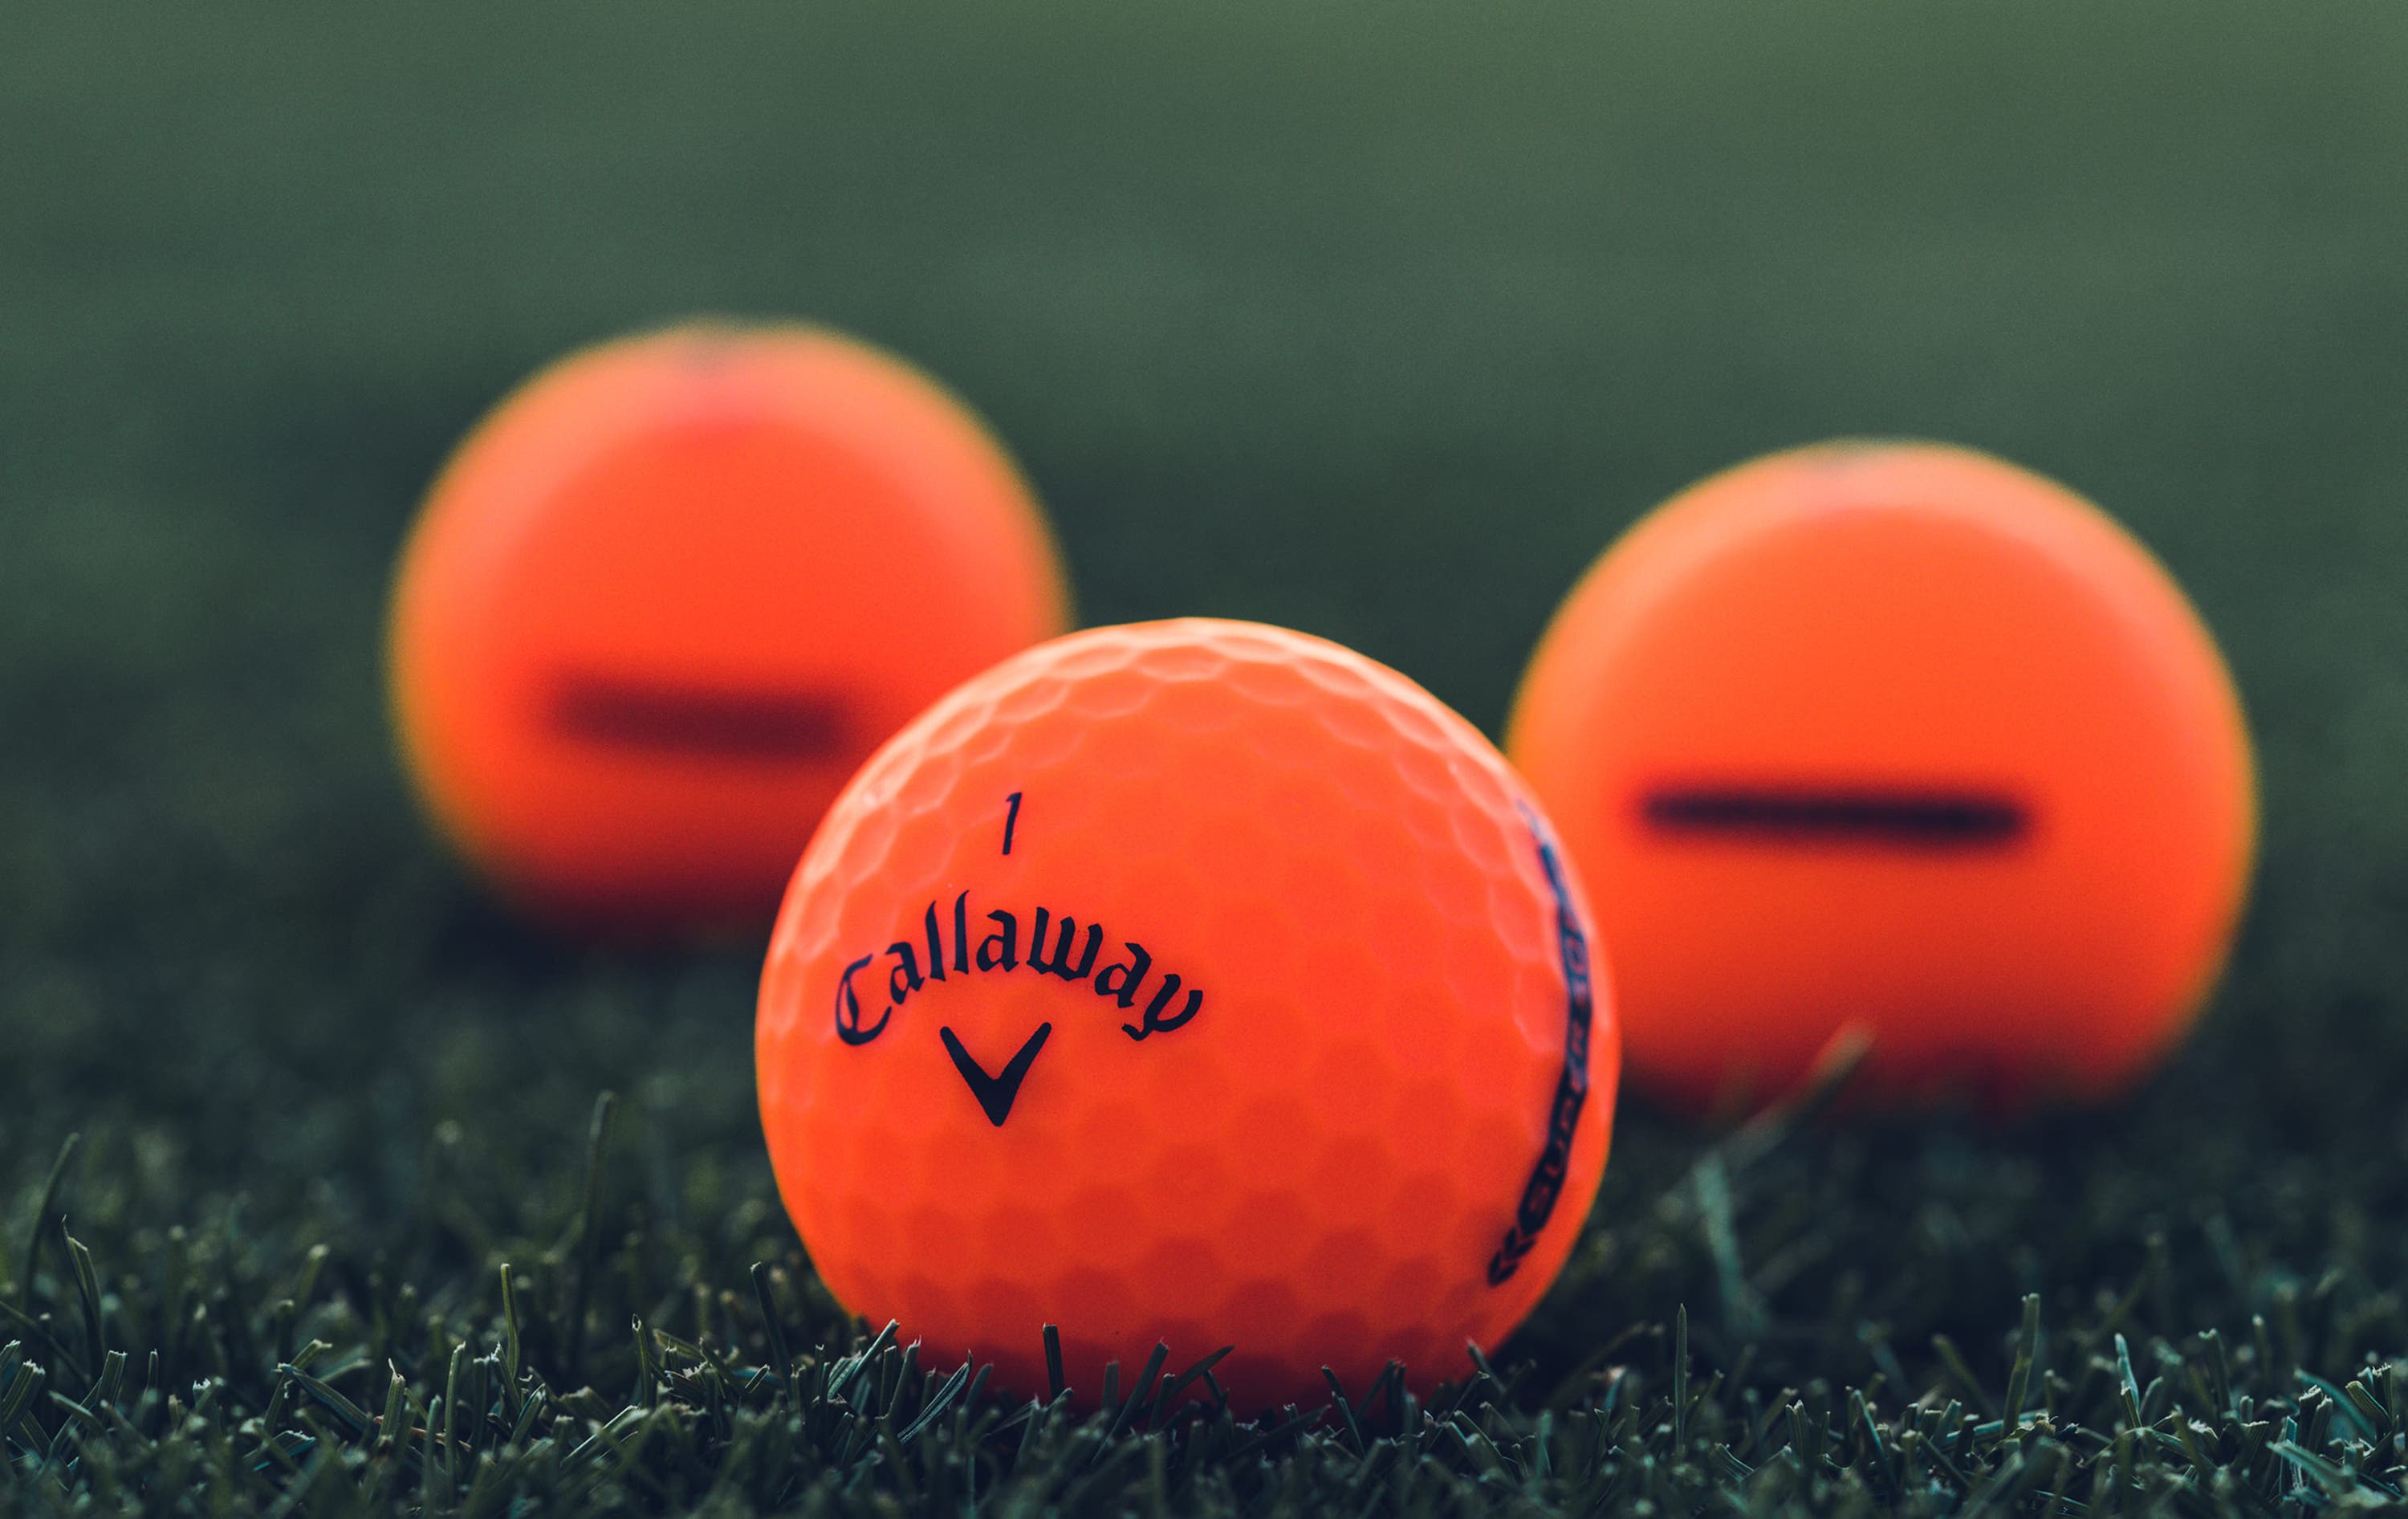 Callaway Golf Gallery image